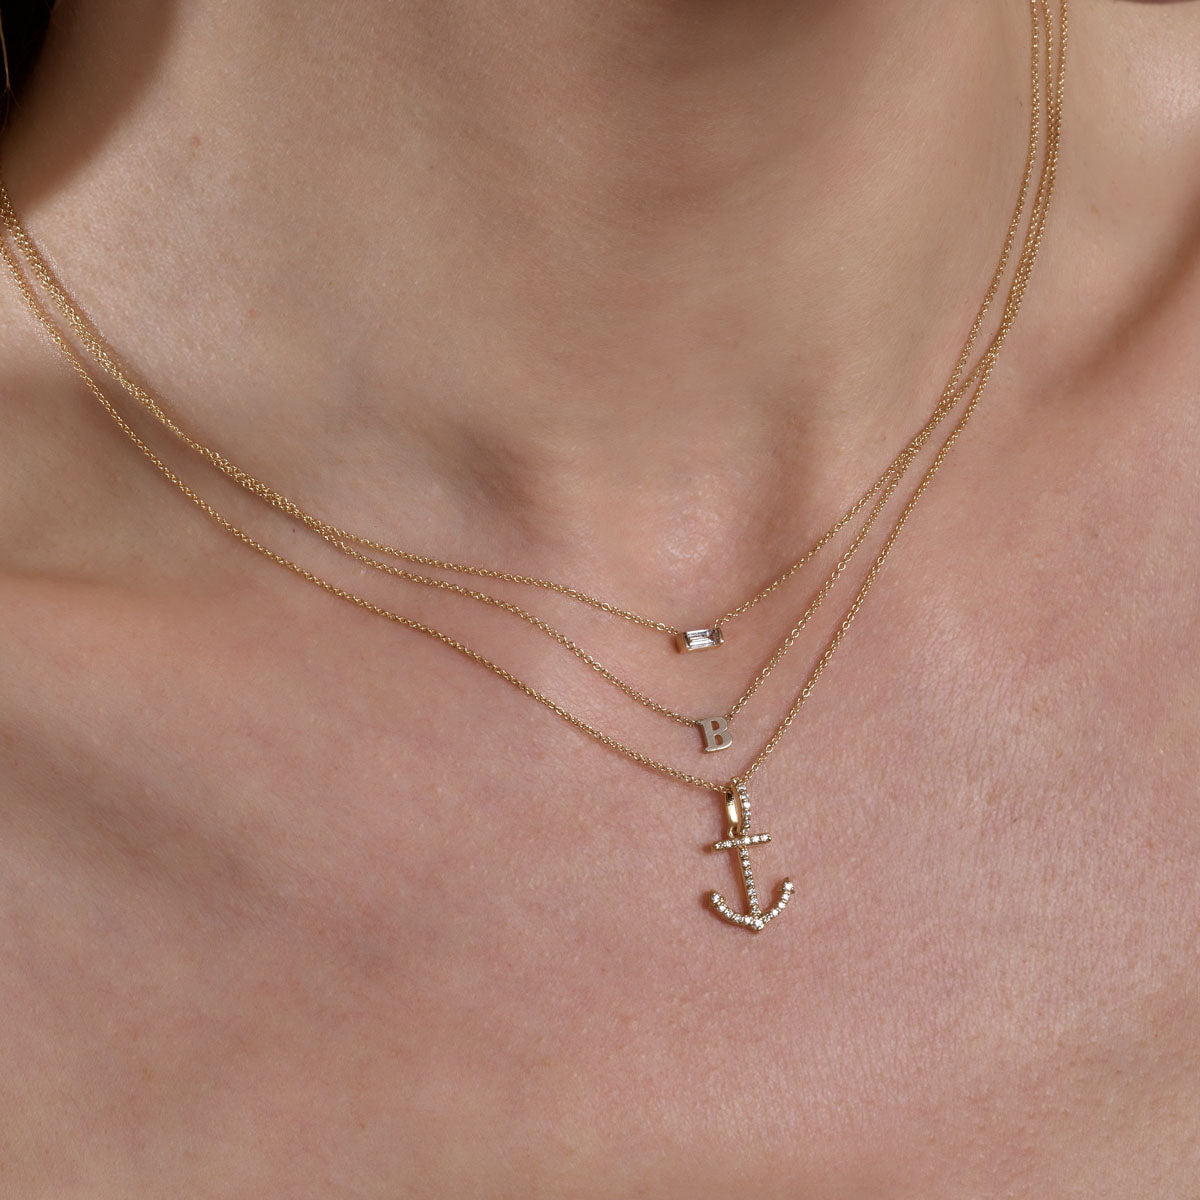 gold diamond rectangle necklace and gold 1 letter initial necklace and gold diamond anchor necklace on neck_a039ebc2 115e 4ff5 a82e 3ddd3dc73ffe